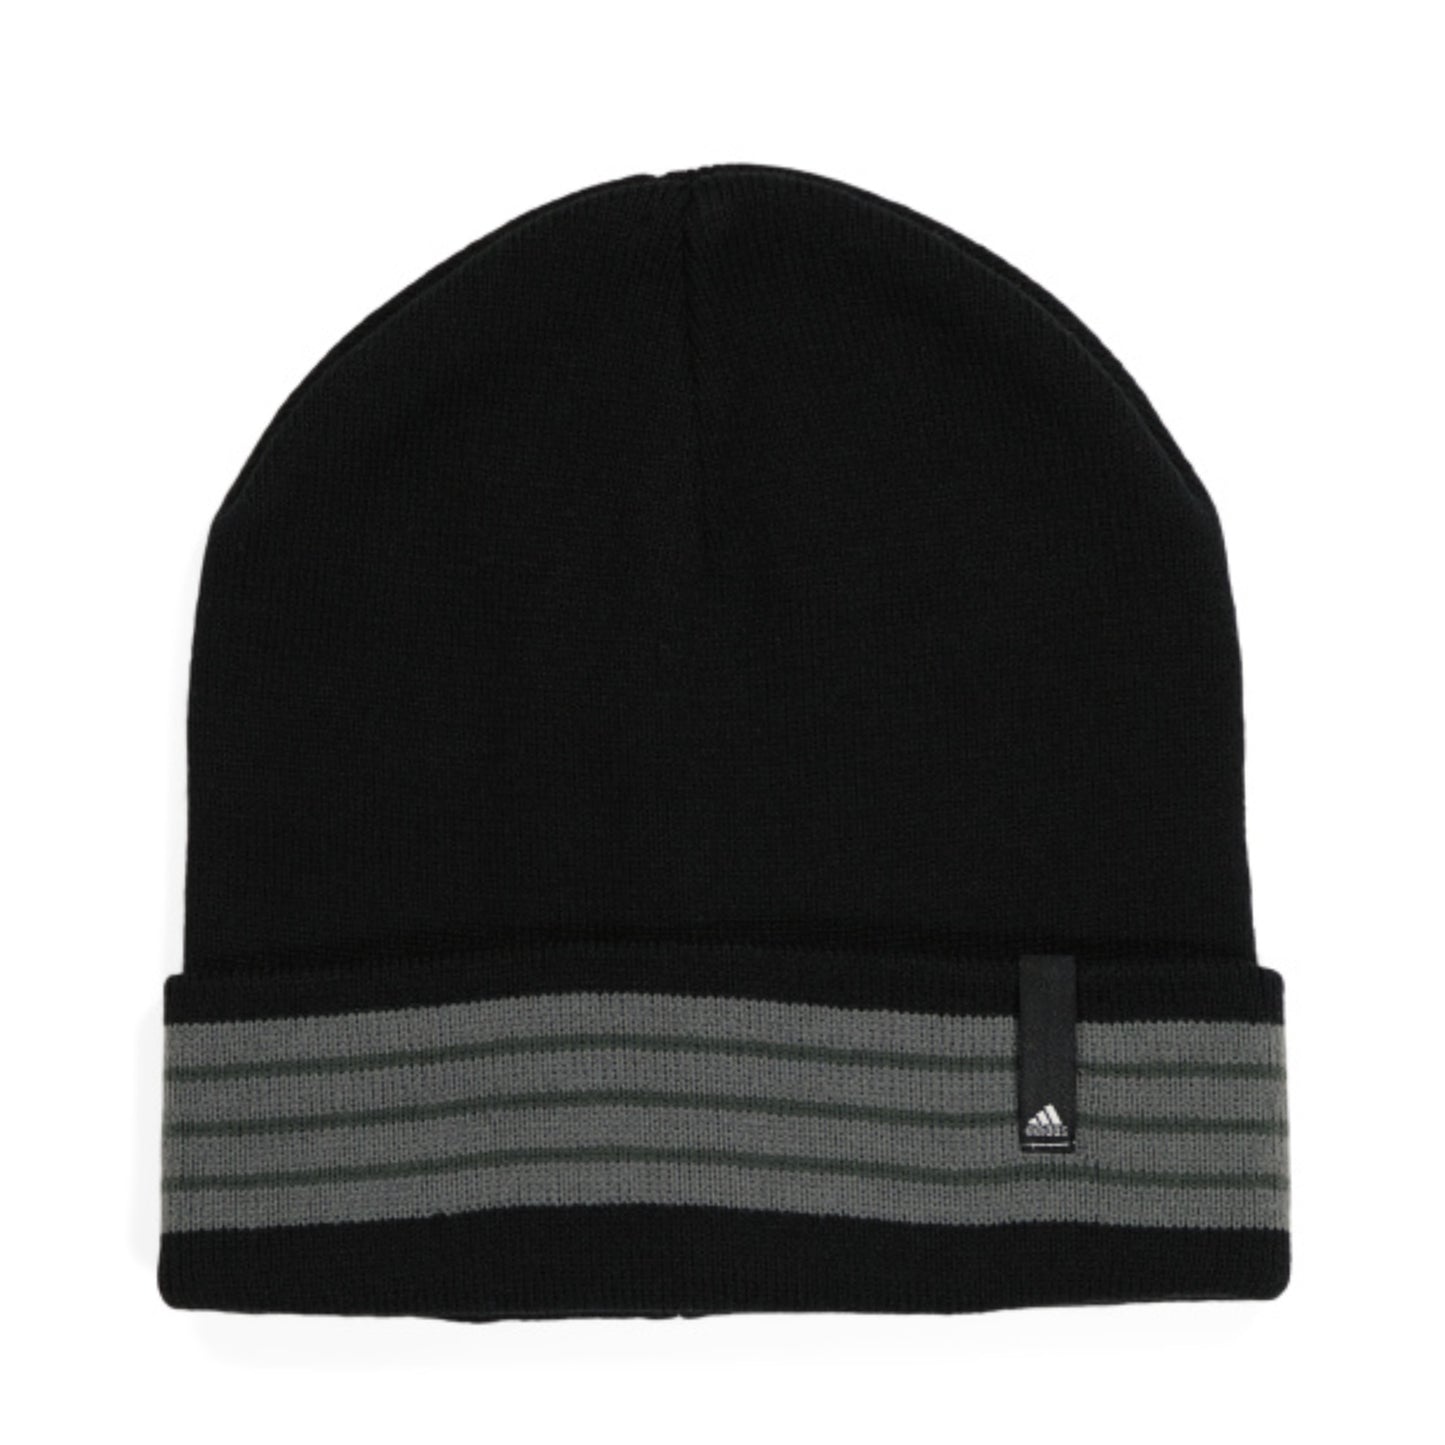 Adidas Men's Core Fold Beanie Knit Winter Hat